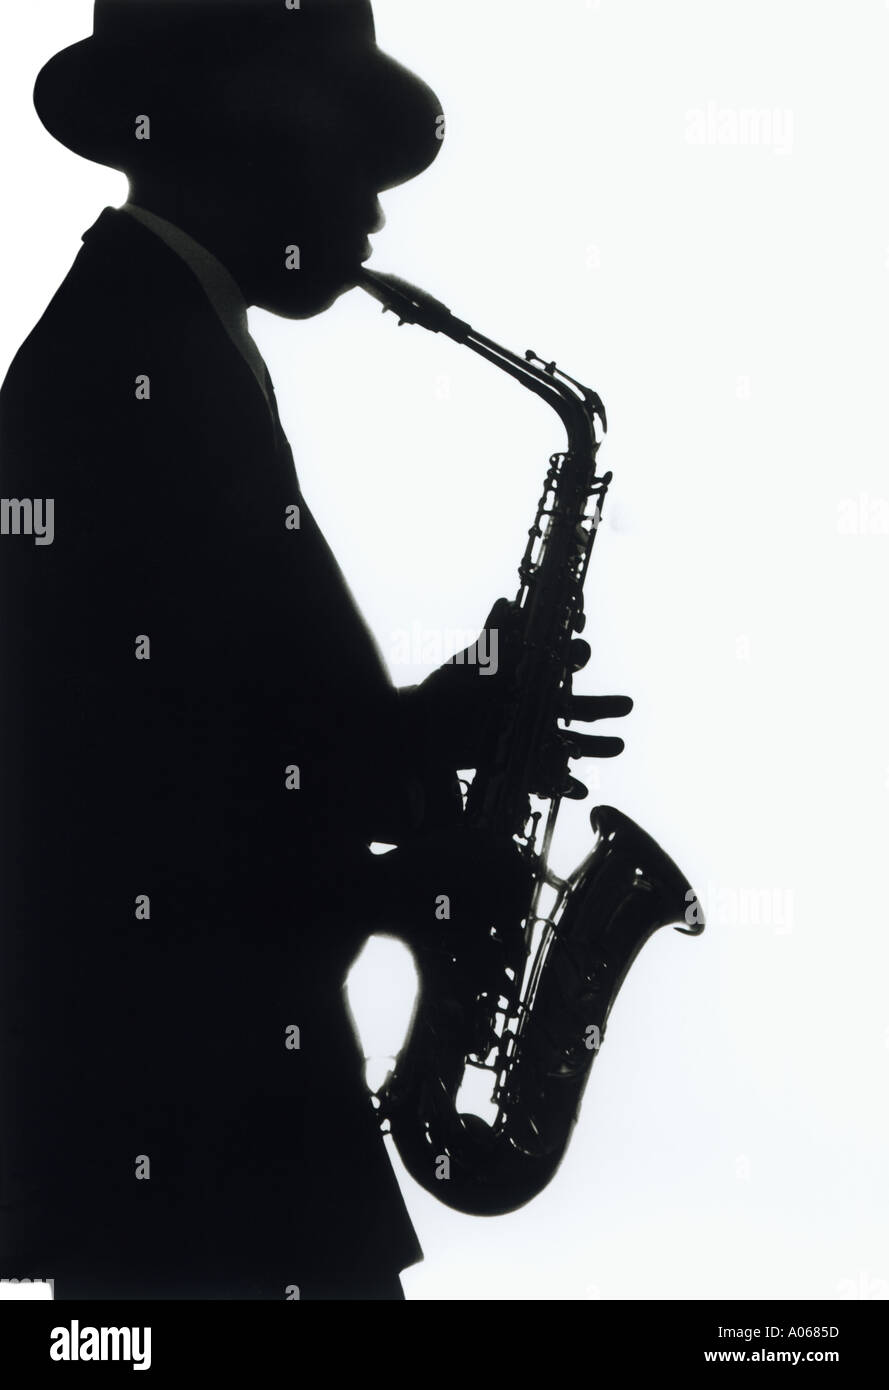 Illustration: Saxophone player man on white background 